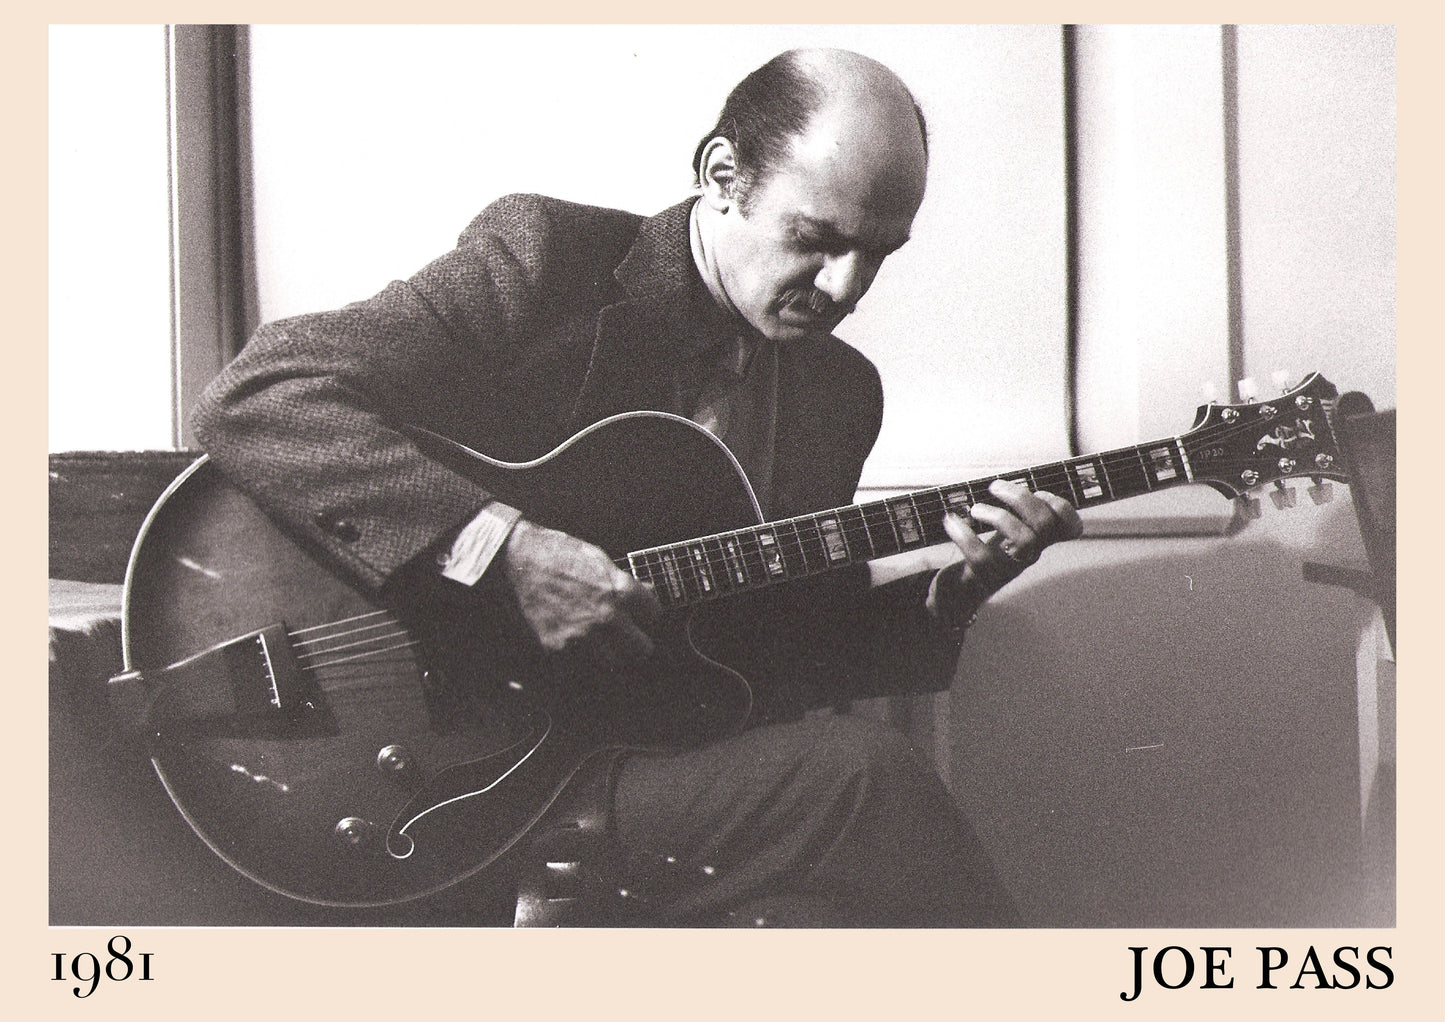 Poster of jazz guitarist Joe Pass